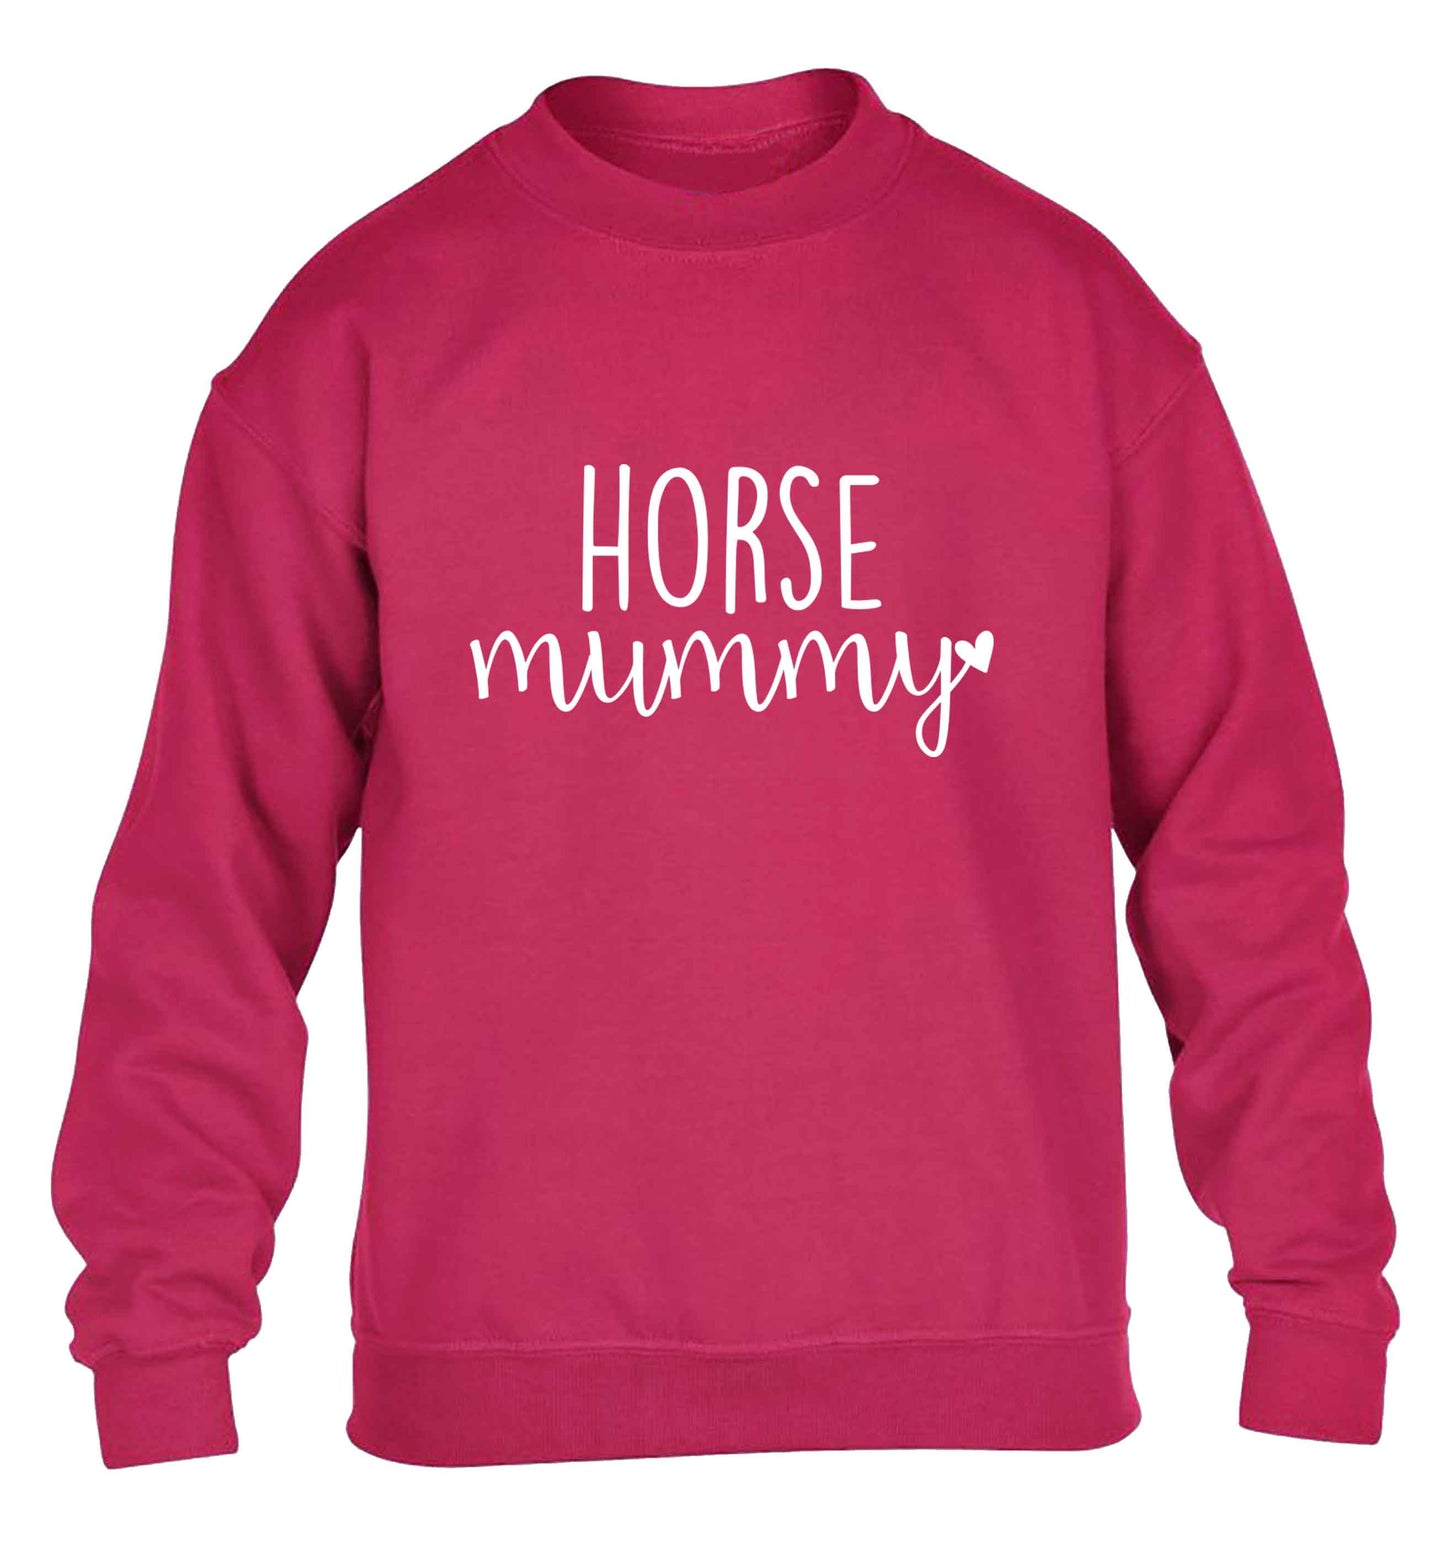 Horse mummy children's pink sweater 12-13 Years